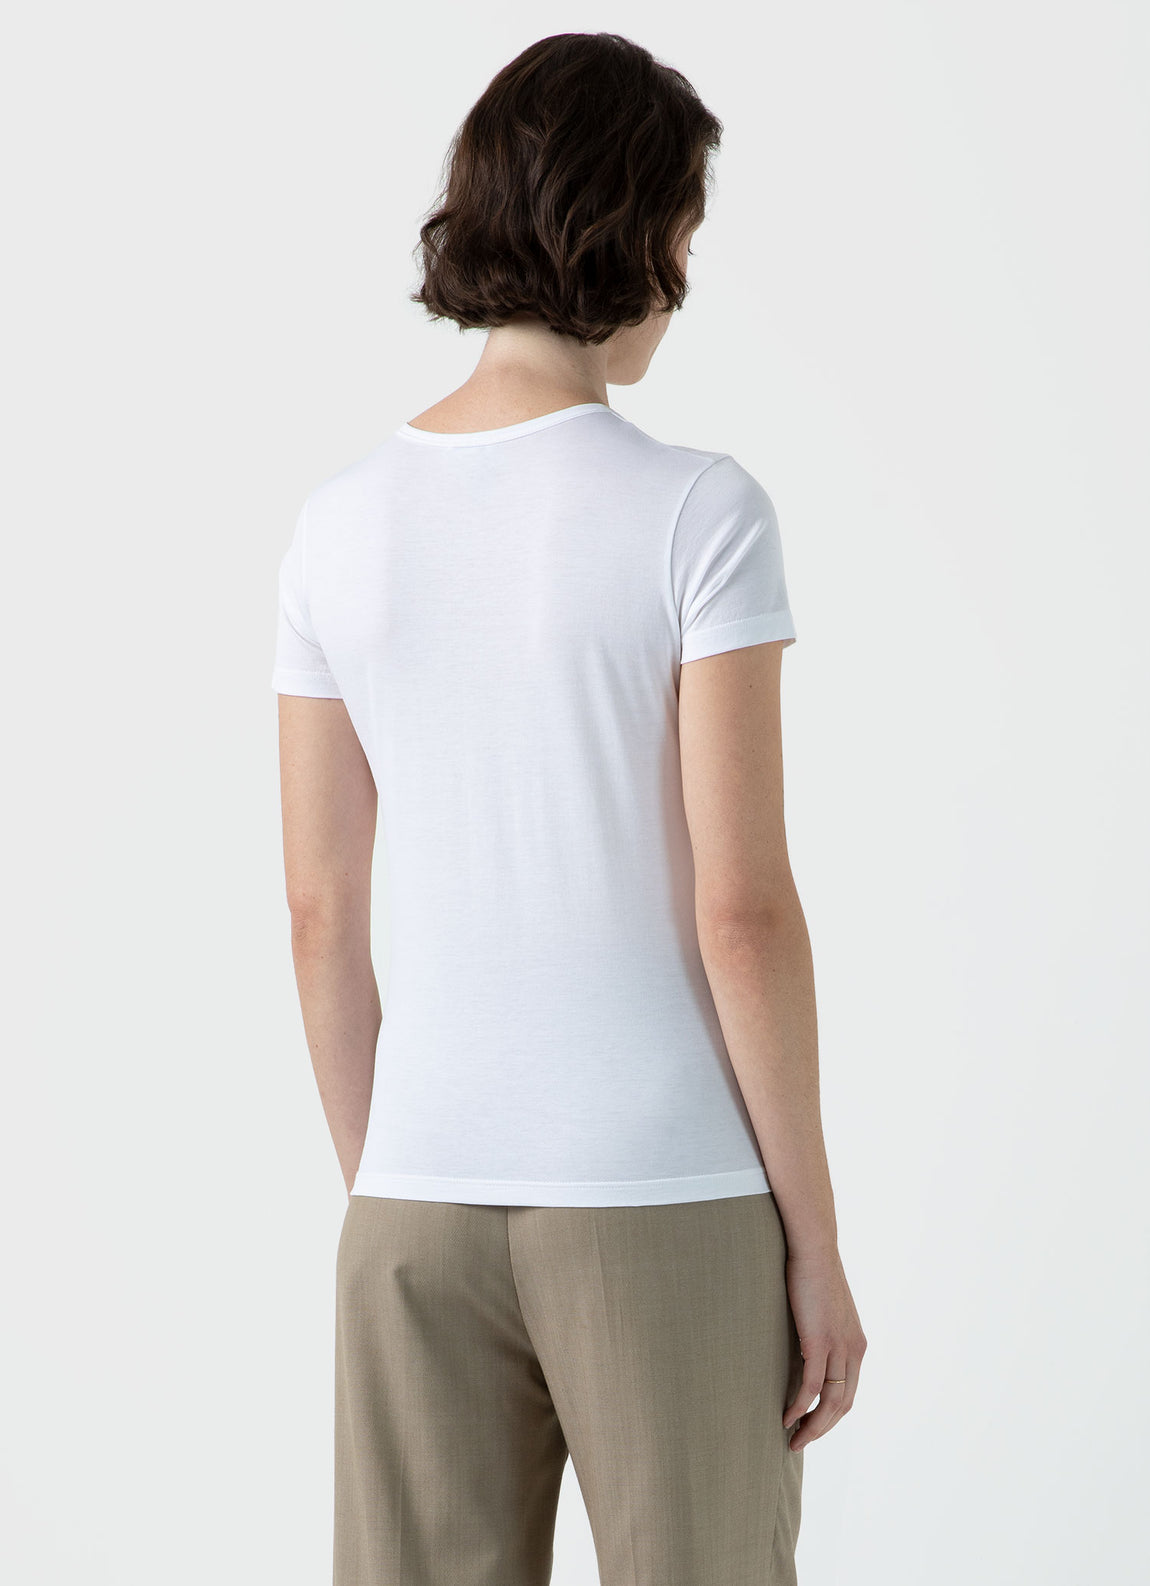 Women's Classic T-shirt in White